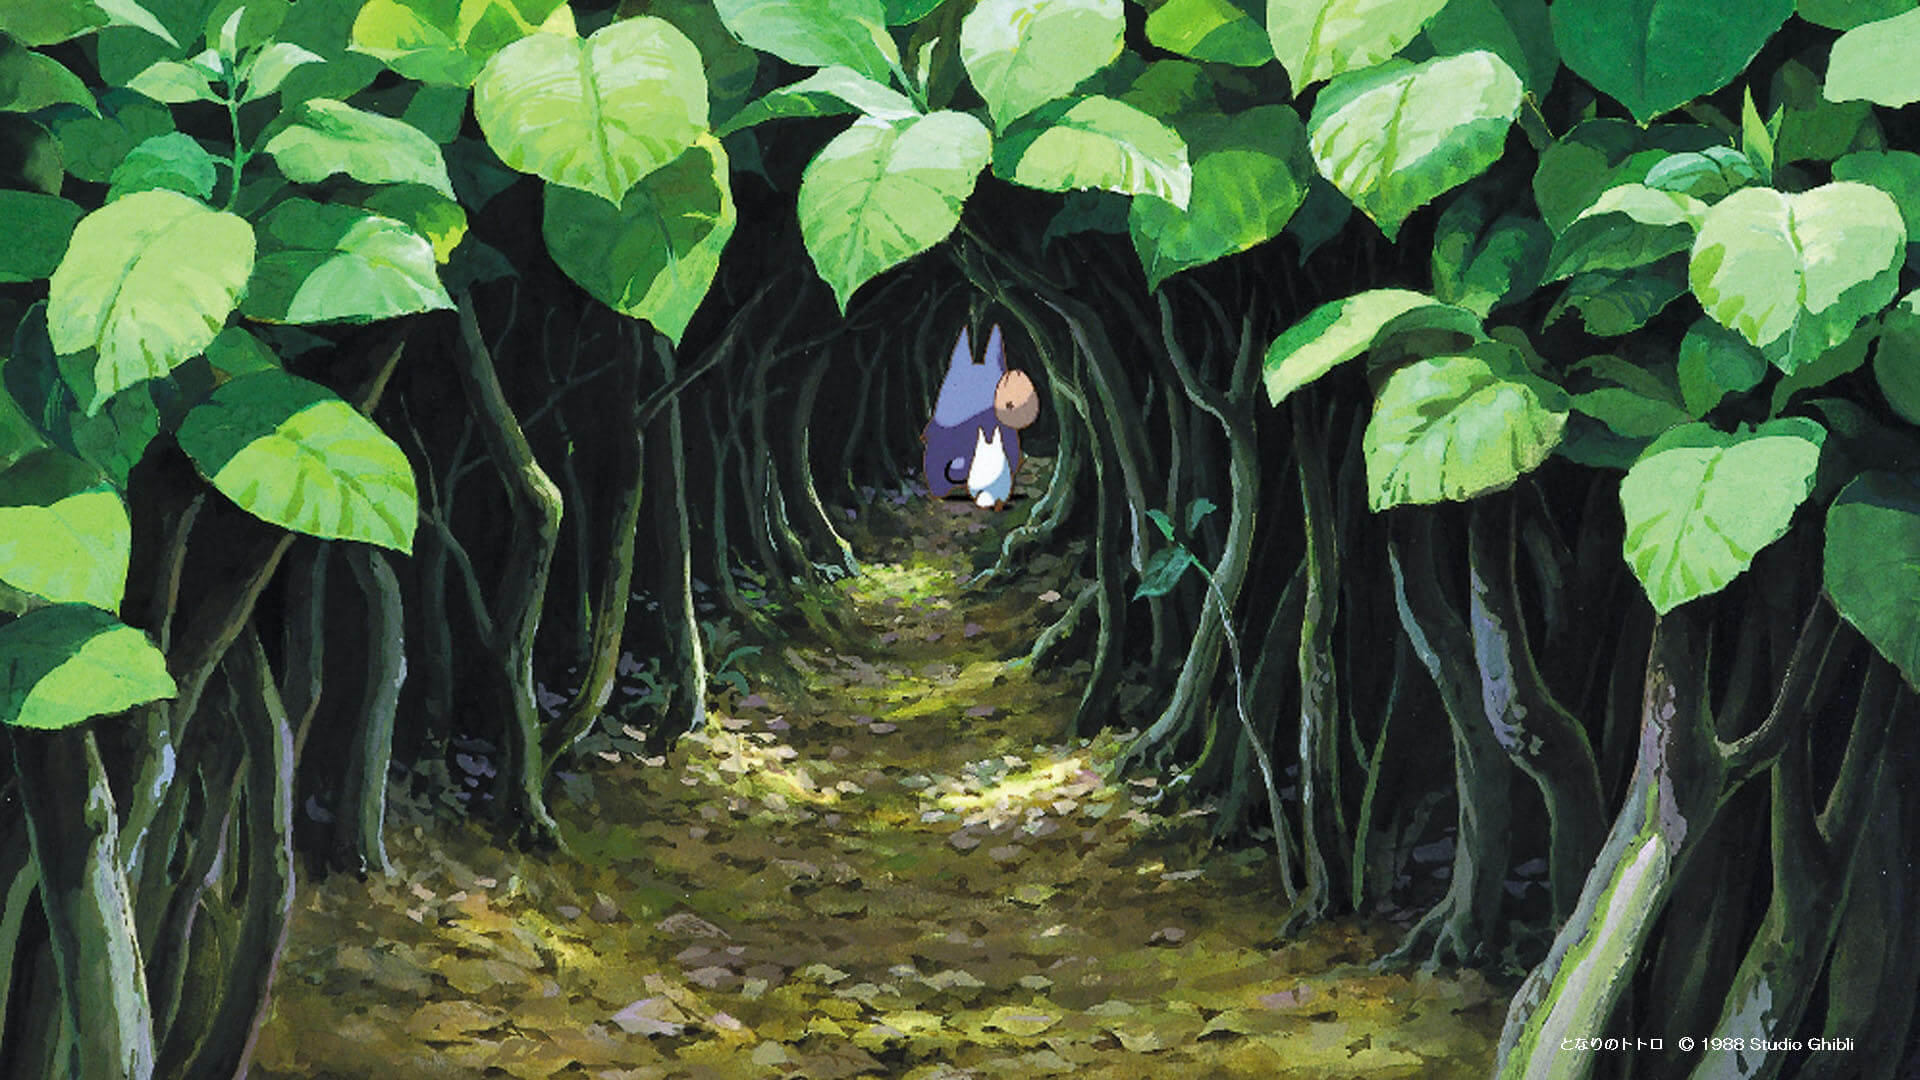 Studio Ghibli's 400 Free Image Let You Be Spirited Away On Zoom Calls